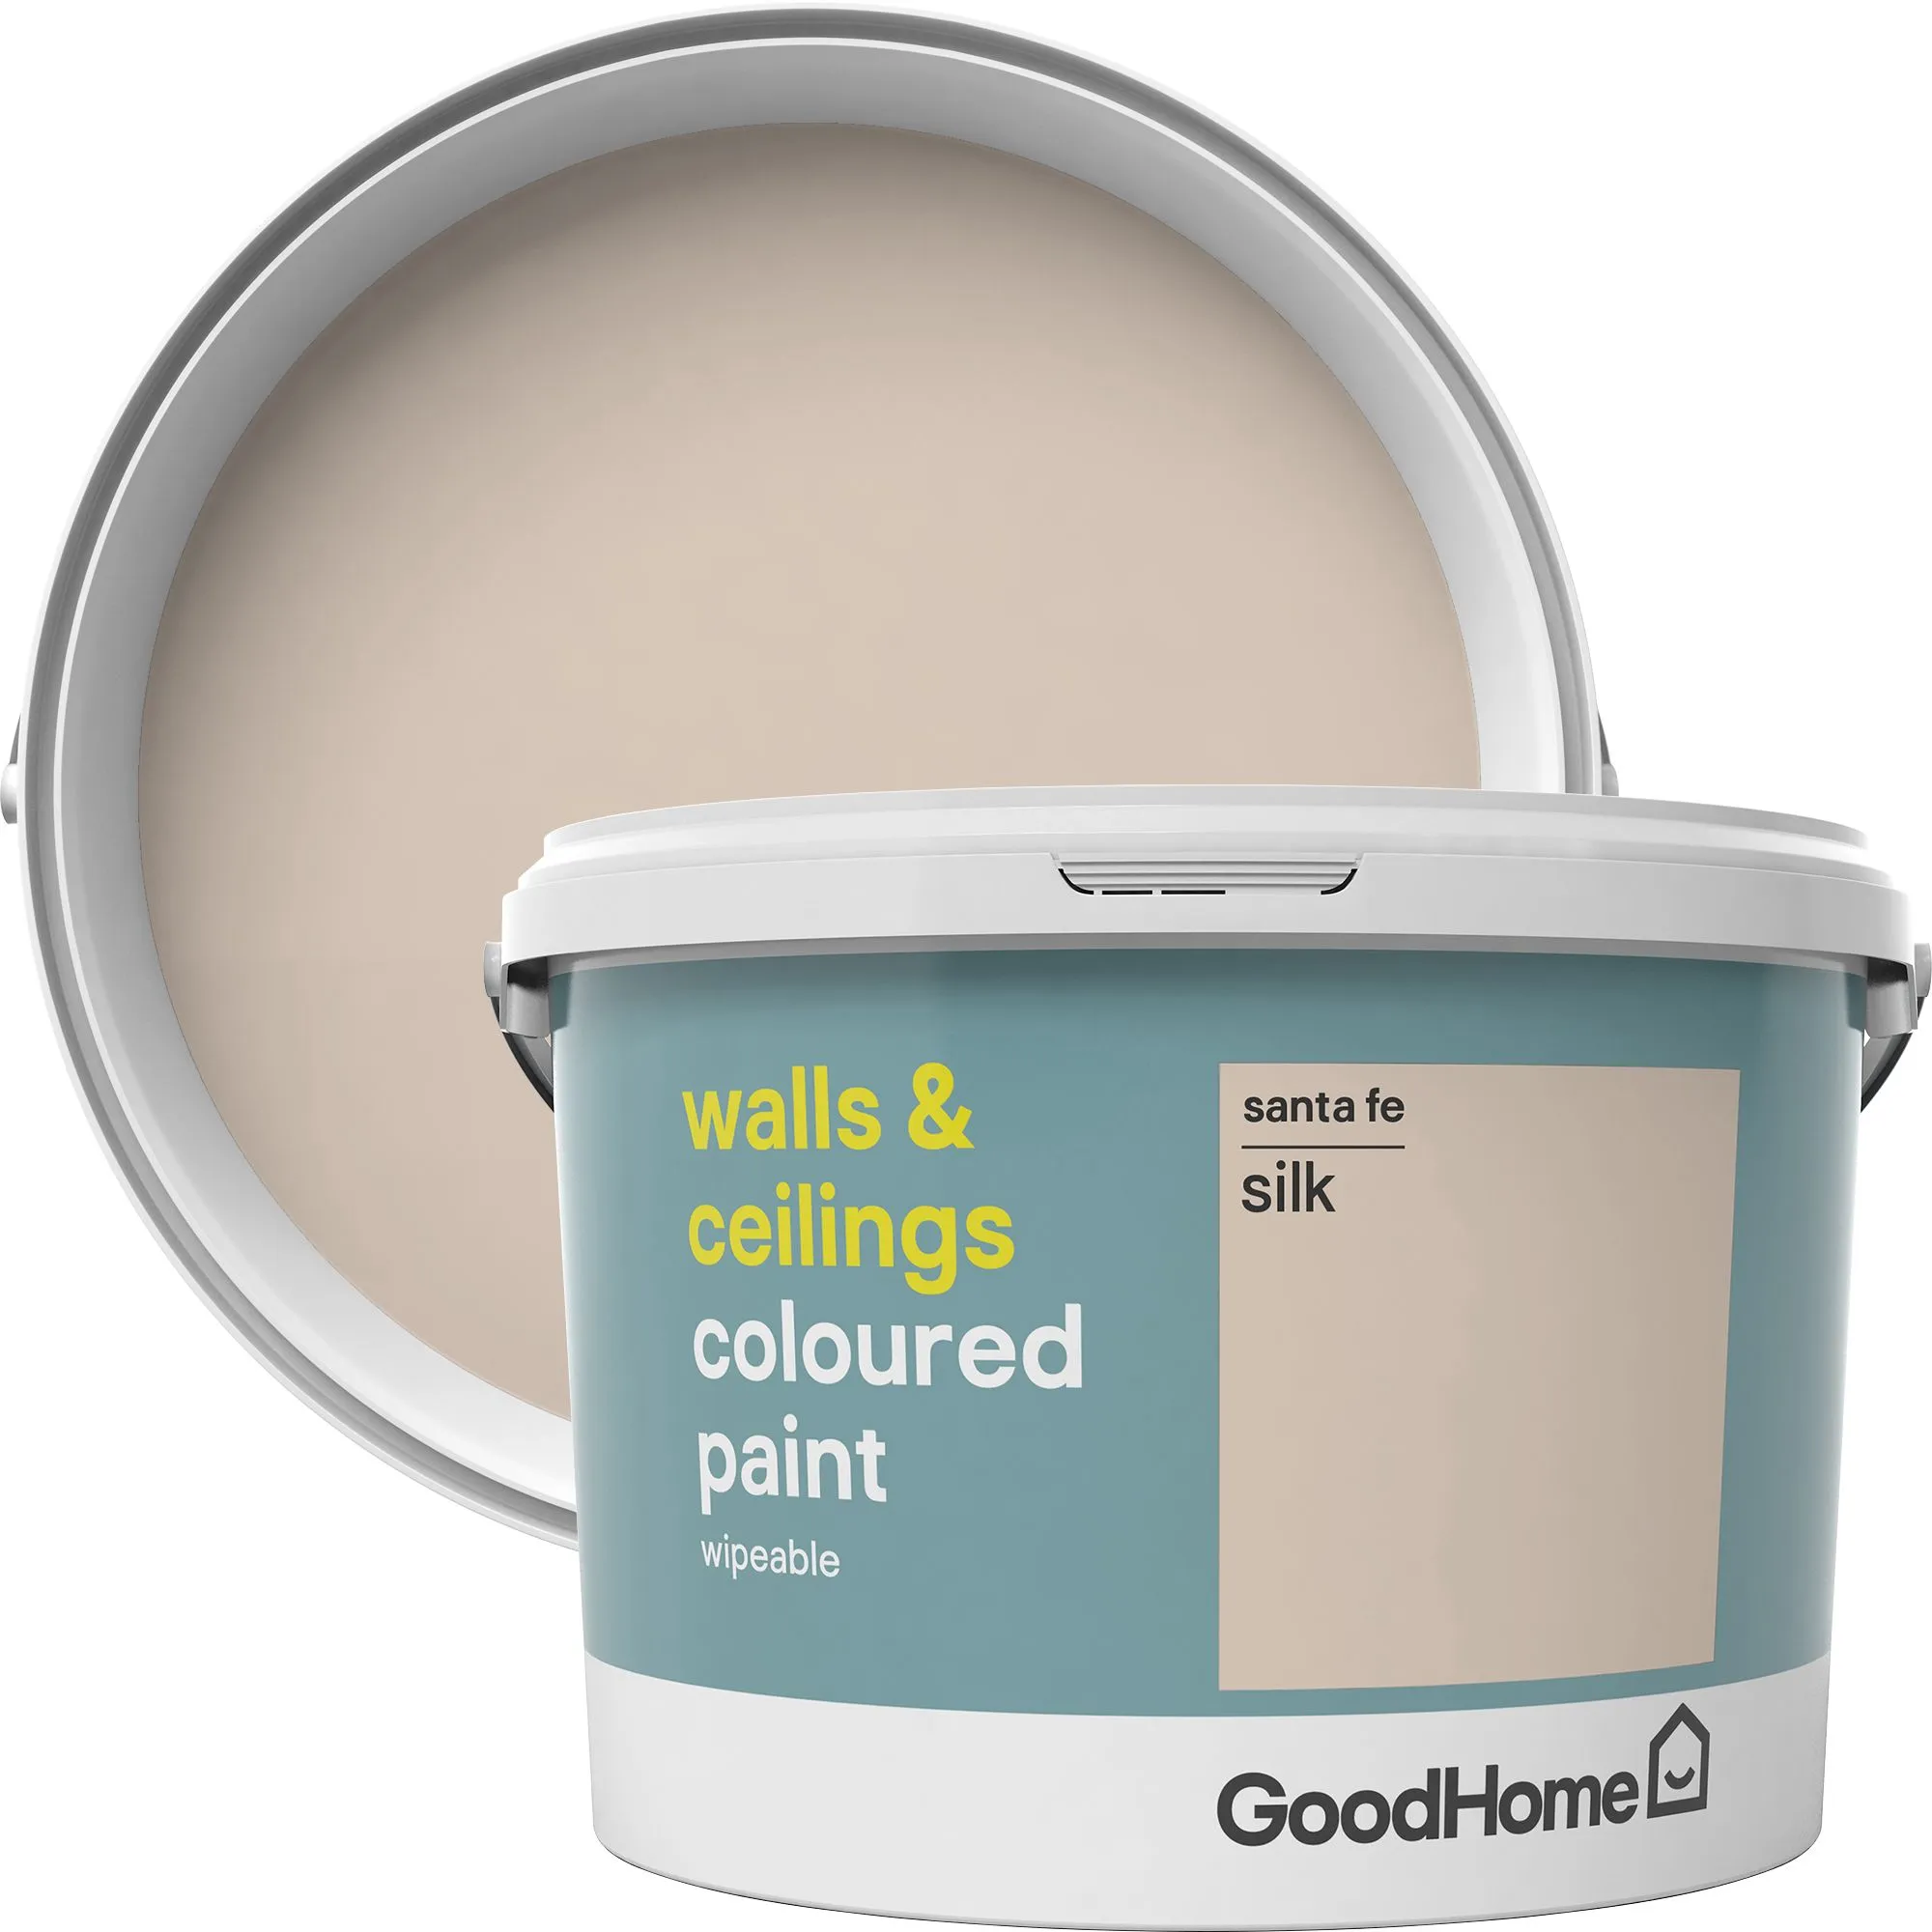 GoodHome Walls & ceilings Santa fe Silk Emulsion paint, 2.5L